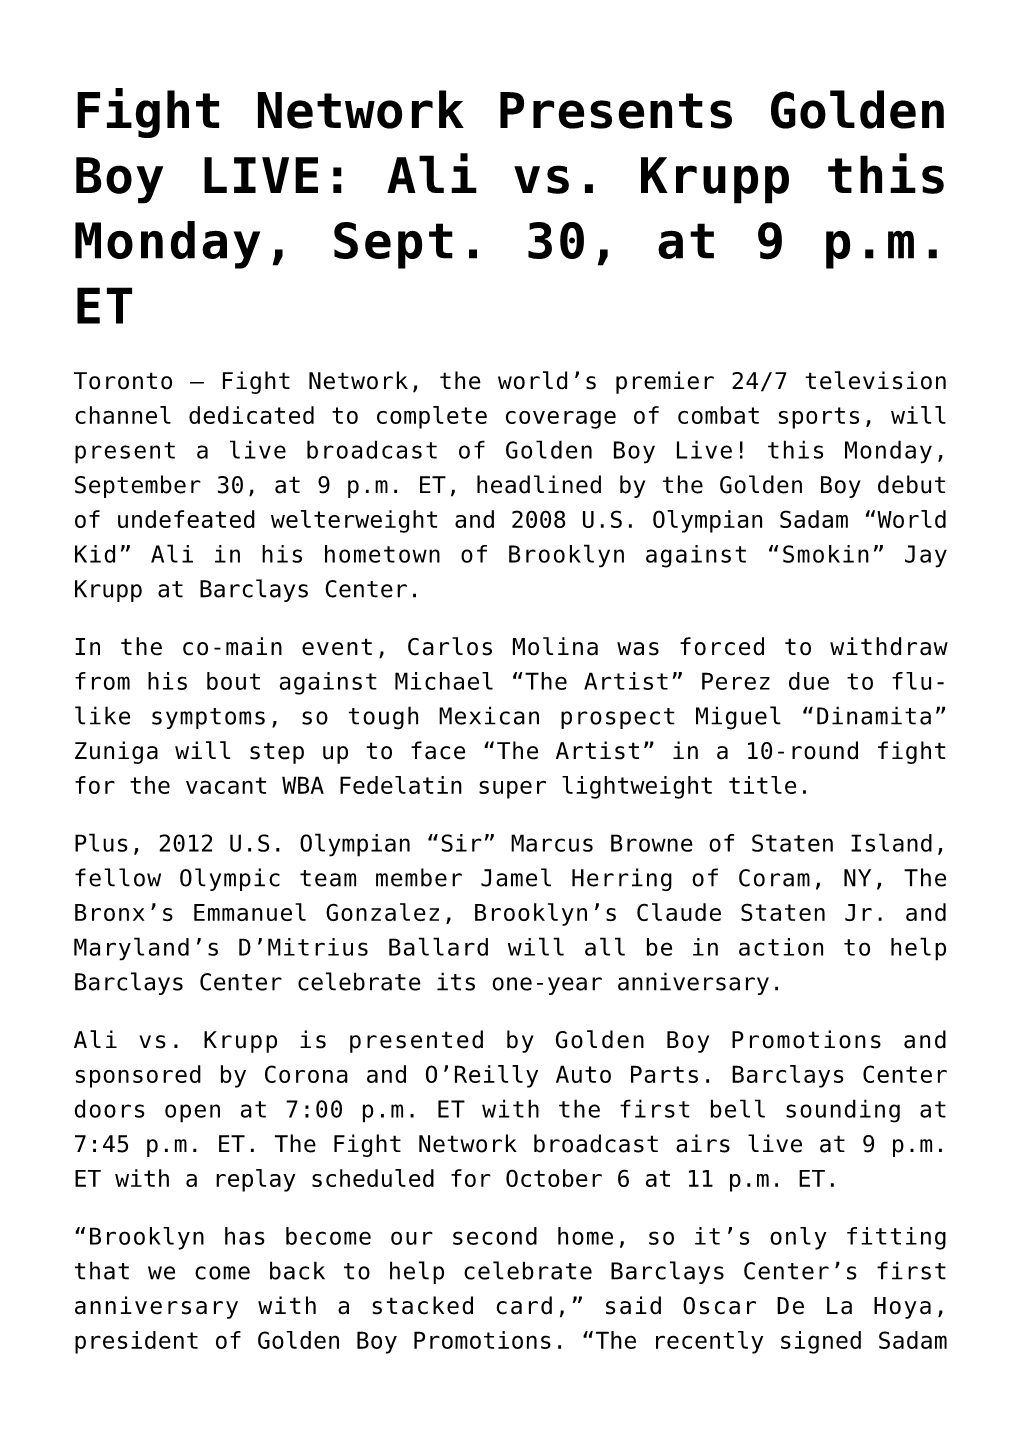 Fight Network Presents Golden Boy LIVE: Ali Vs. Krupp This Monday, Sept